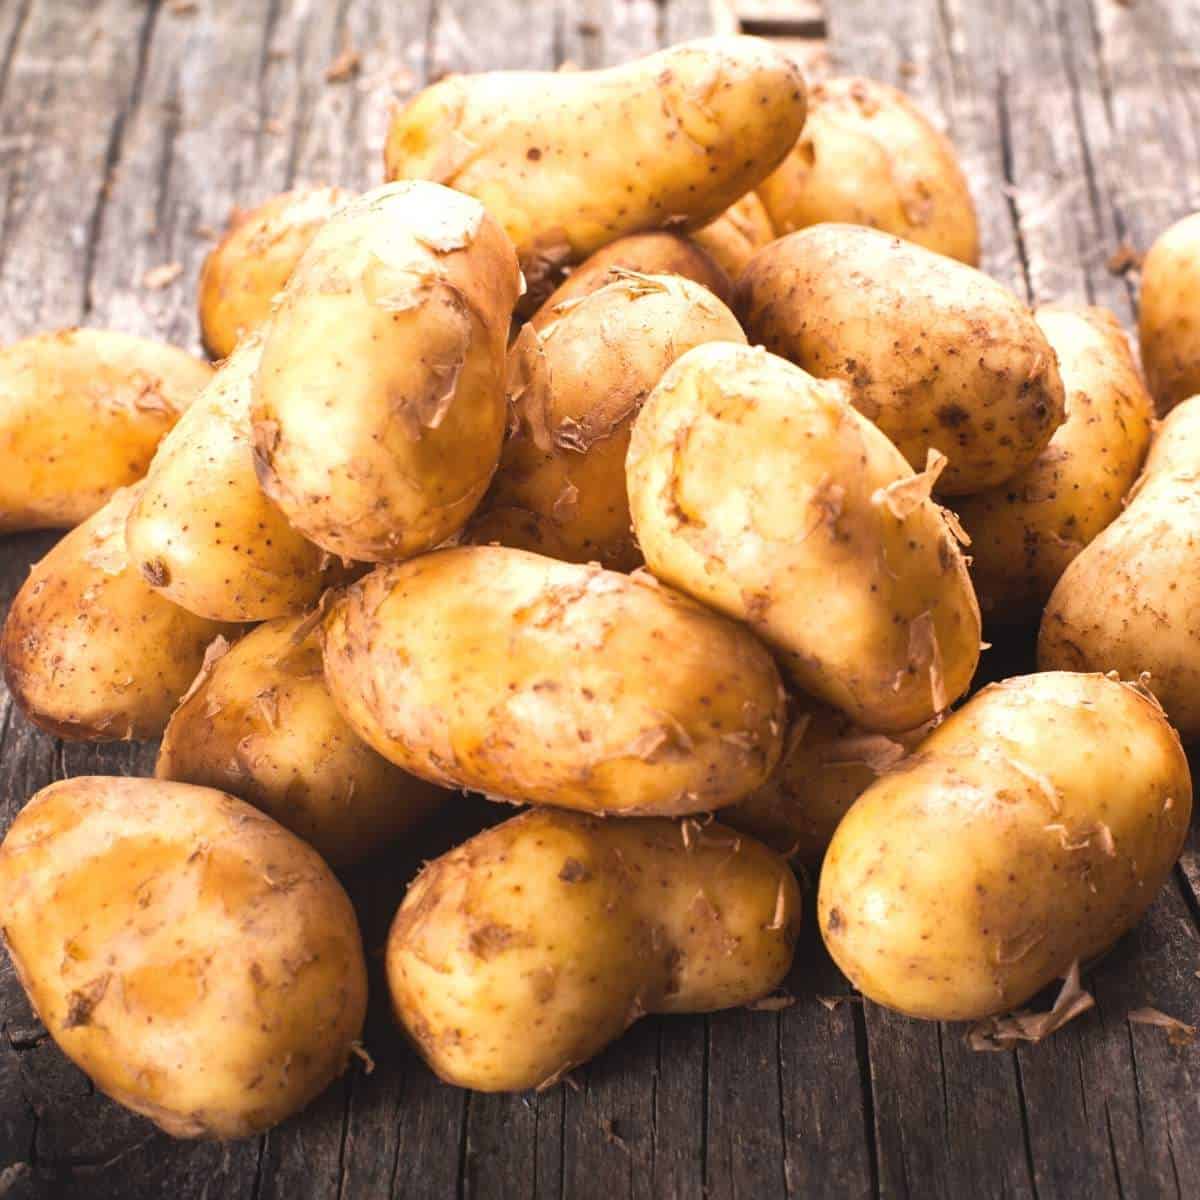 pile of potatoes - can you eat potatoes on keto?